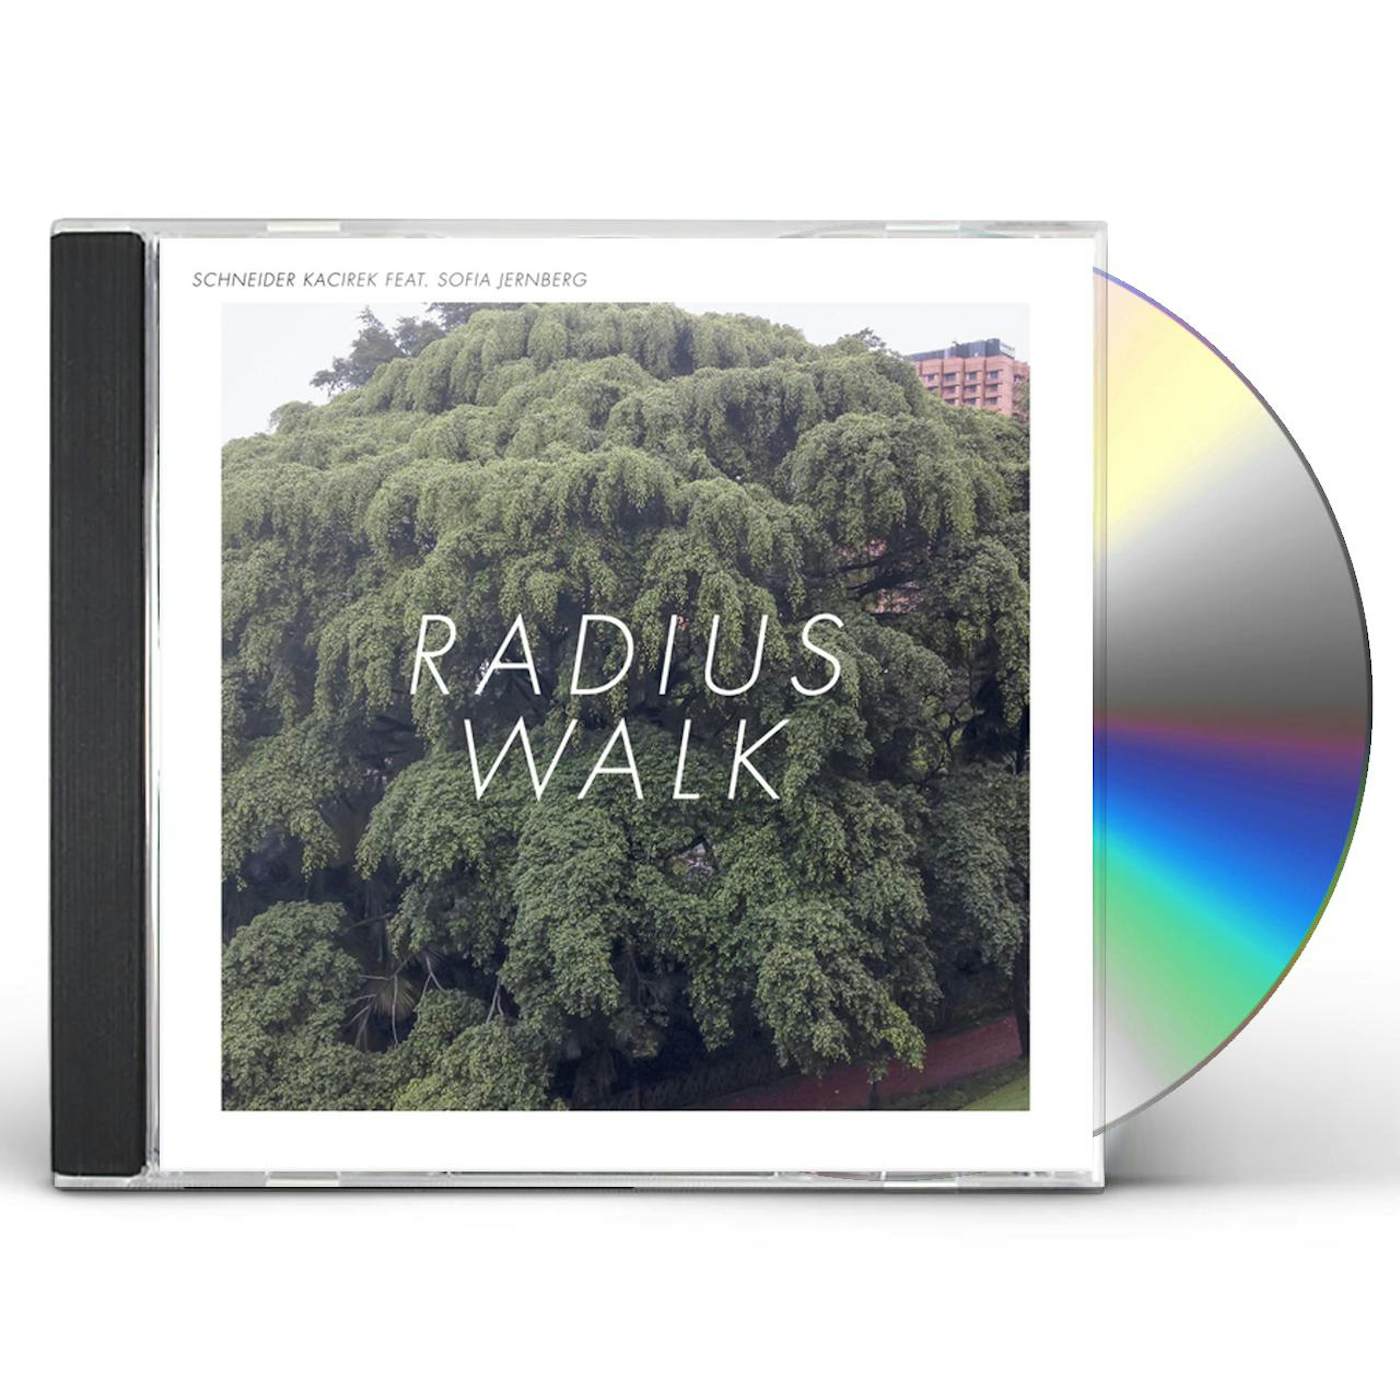 Schneider Kacirek RADIUS WALK CD